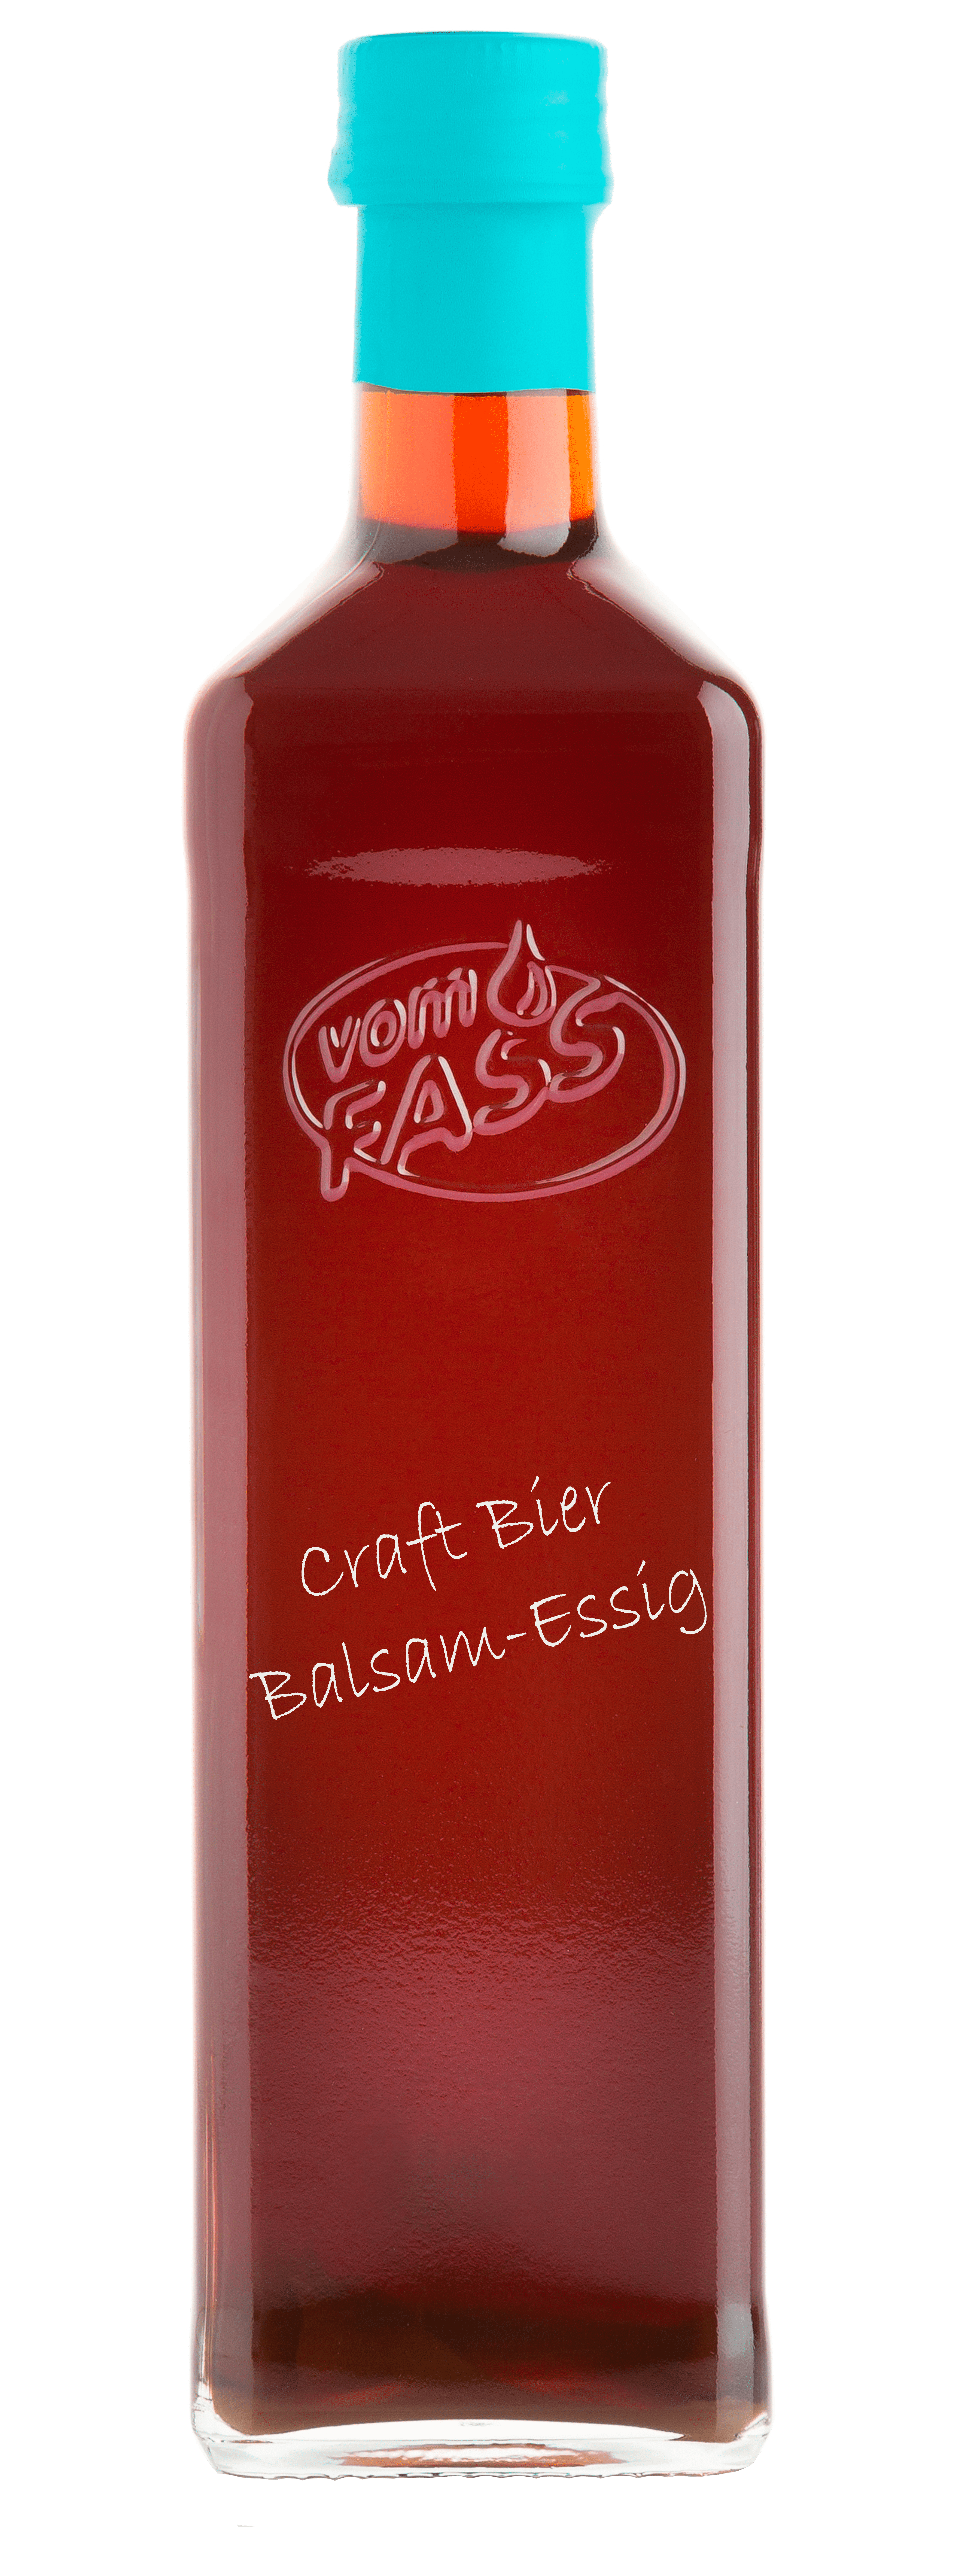 Craft Beer Balsam-Essig 0